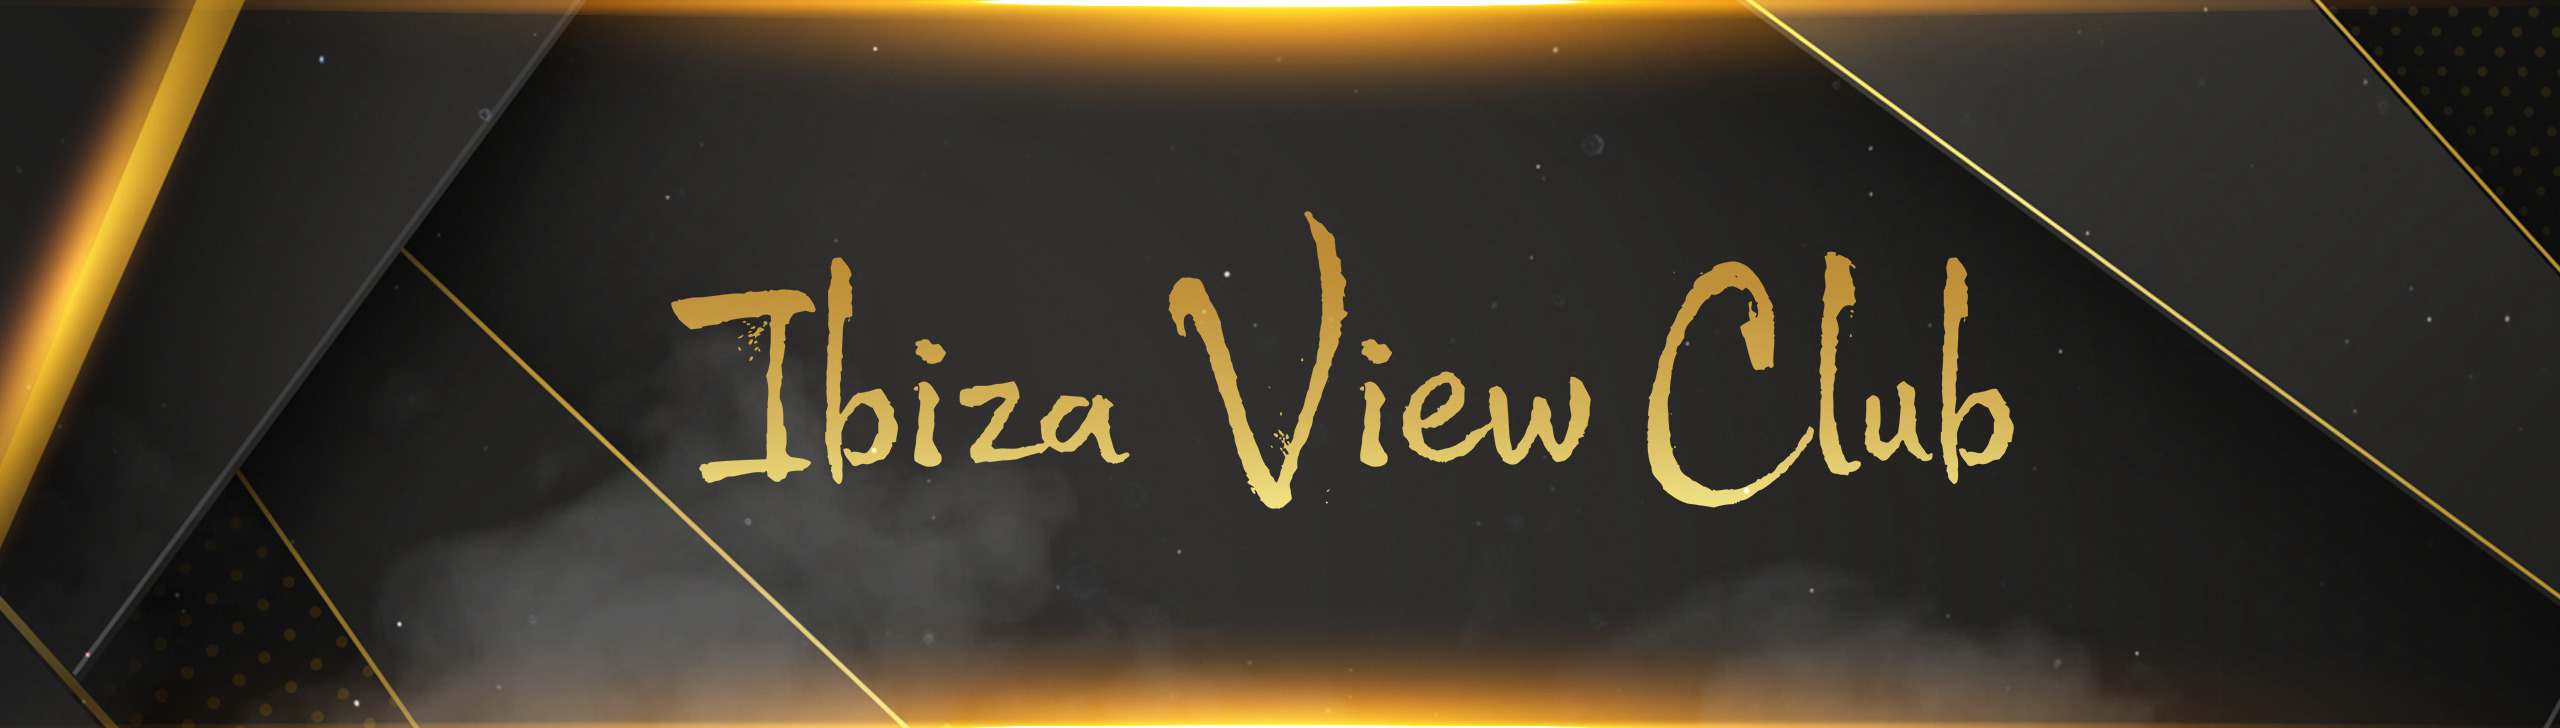 Ibiza View Club